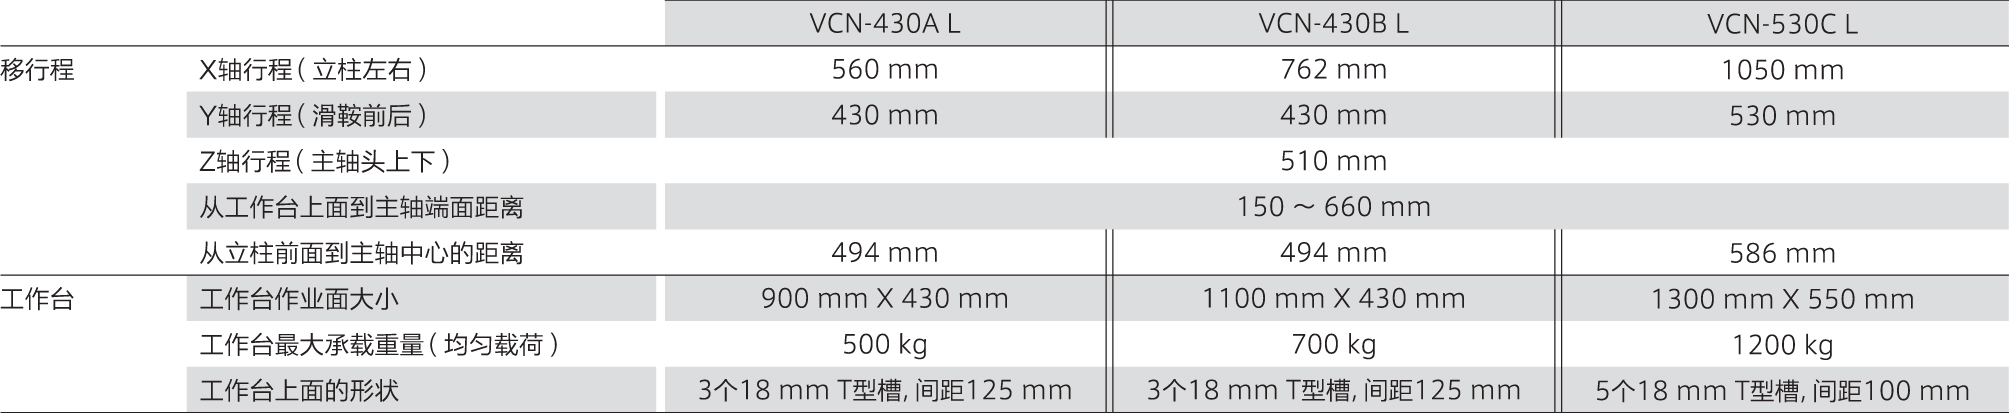 VCN430-530 L技术参数